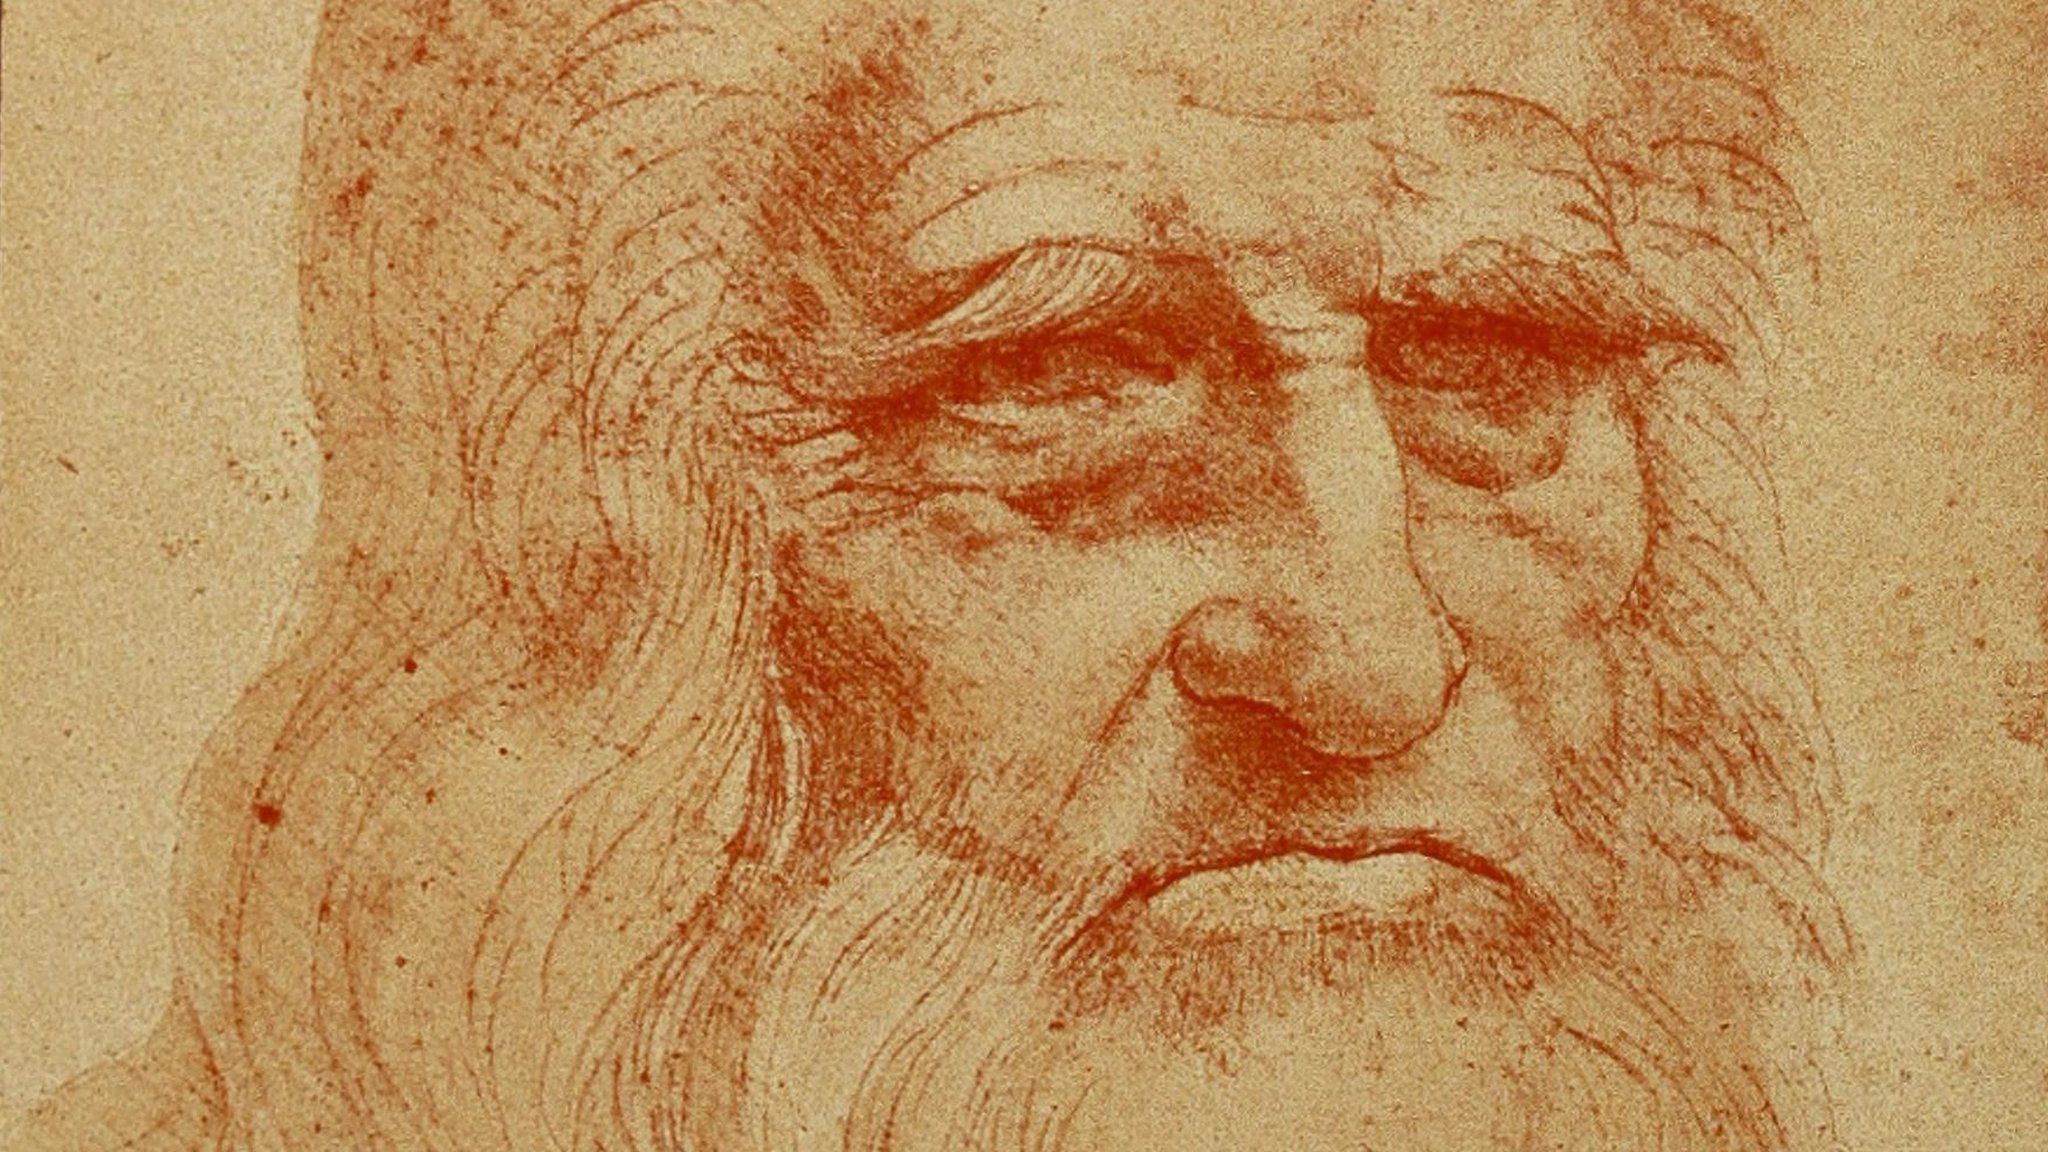 Portrait of a bearded man in red chalk by Leonardo da Vinci (circa 1510), widely accepted as a self-portrait